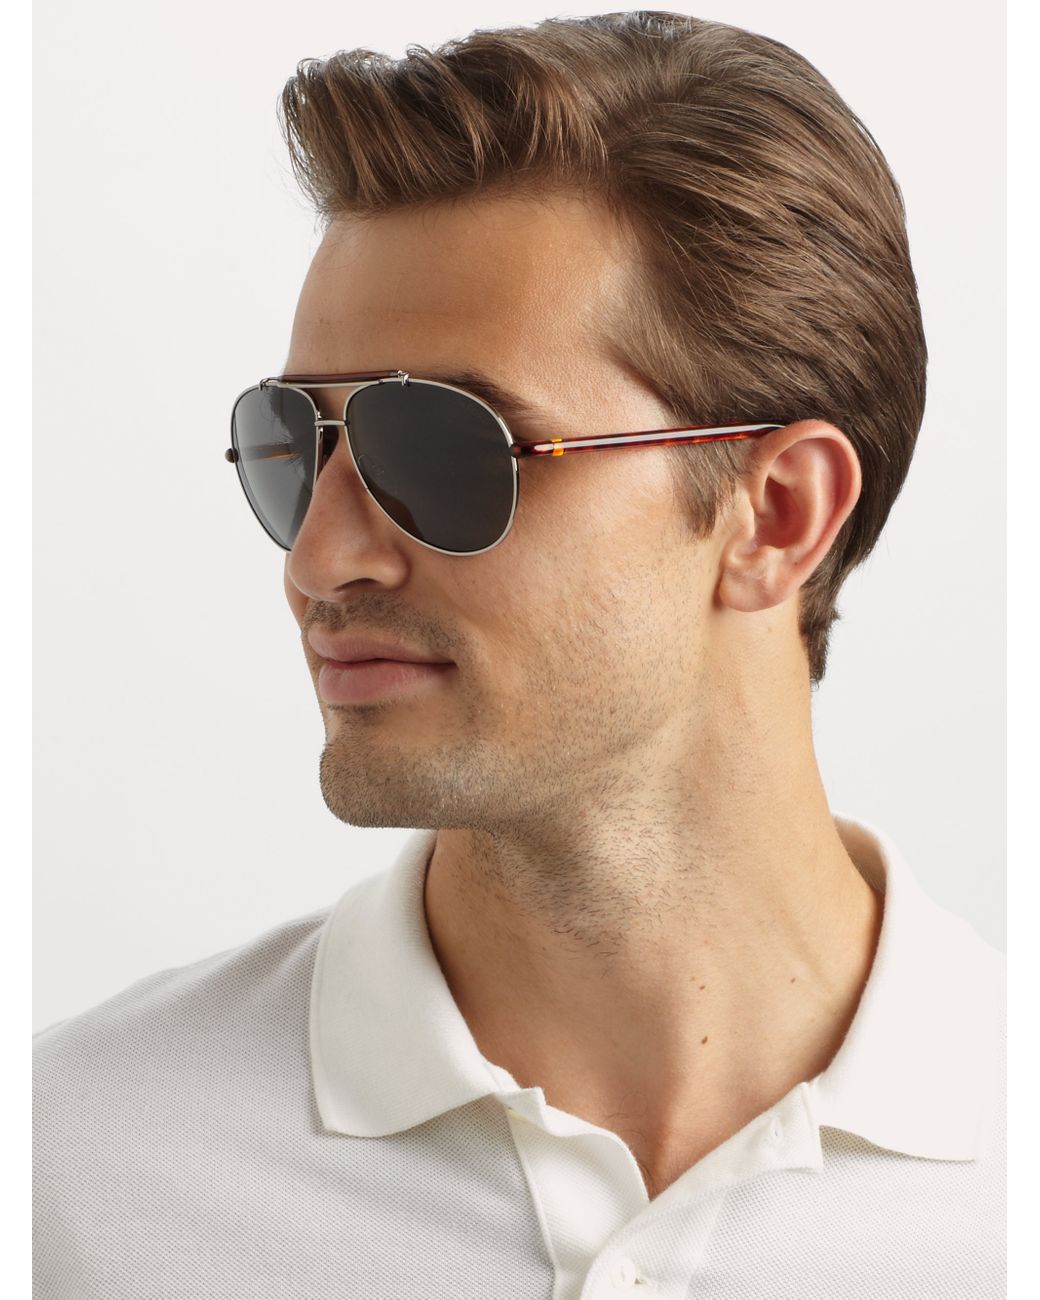 Tom Ford Men's Sunglasses - Bradford Smoke Lens Shiny Gold Frame